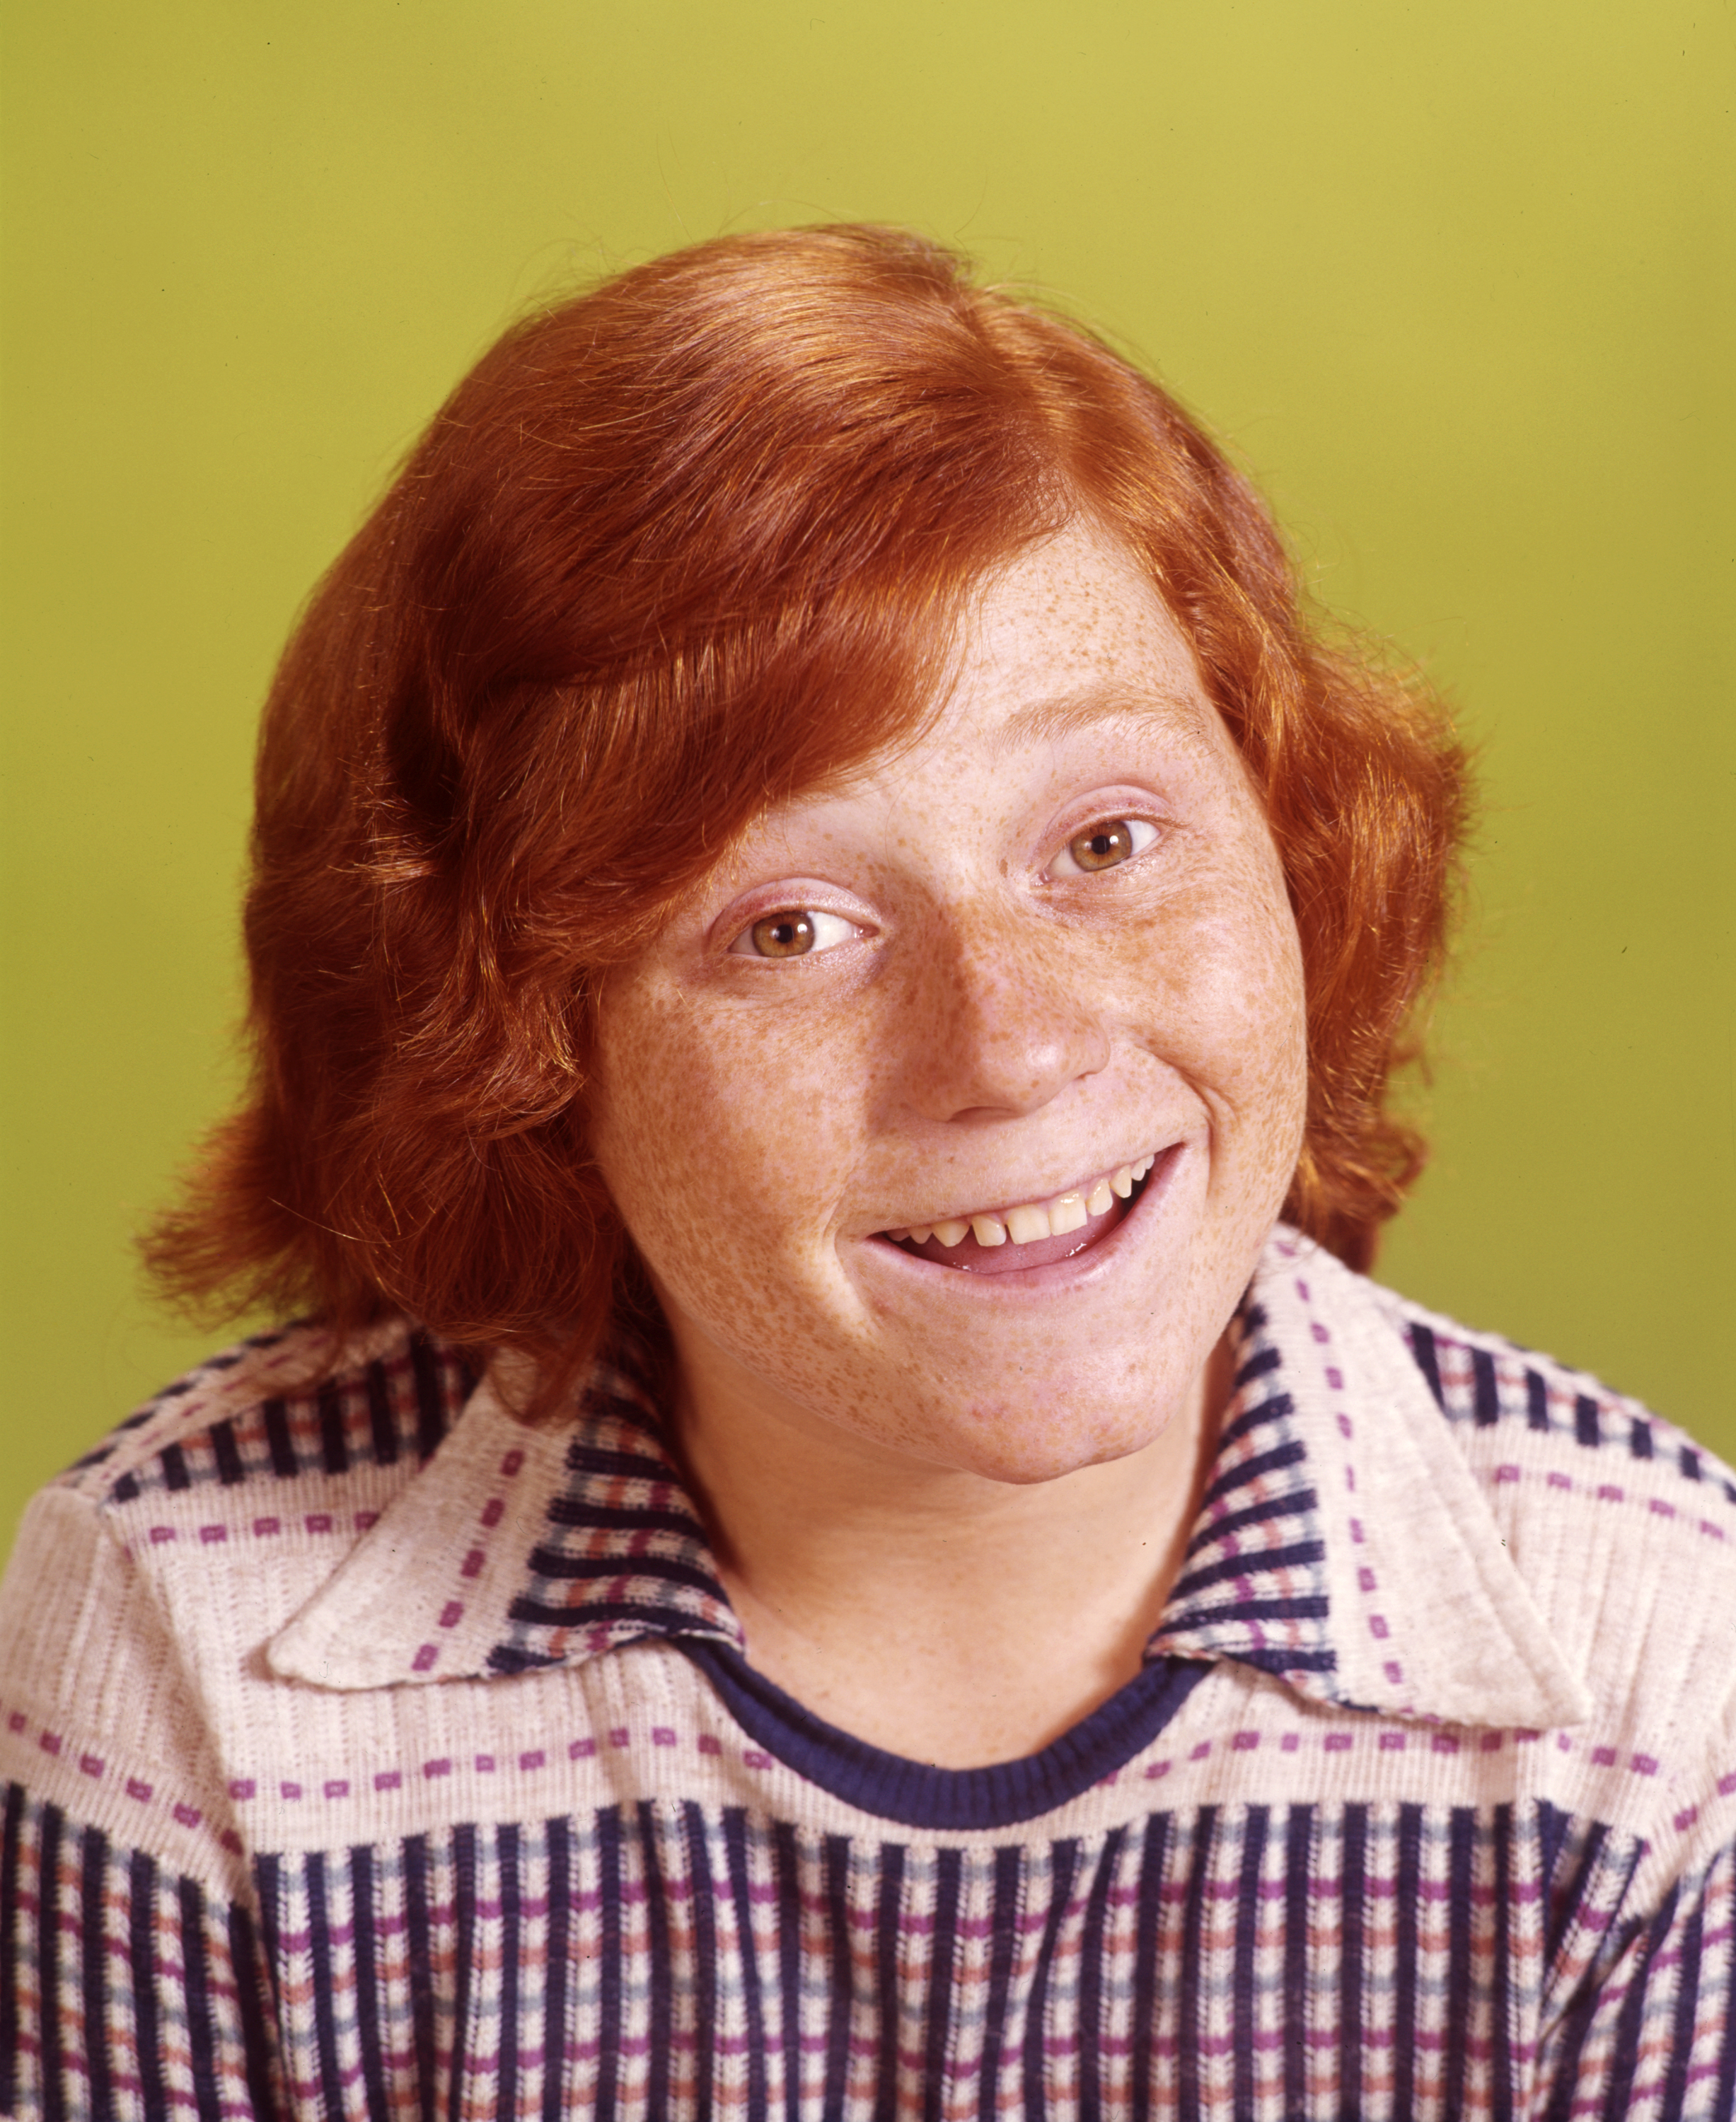 Child star Danny Bonaduce, circa 1973. | Source: Getty Images